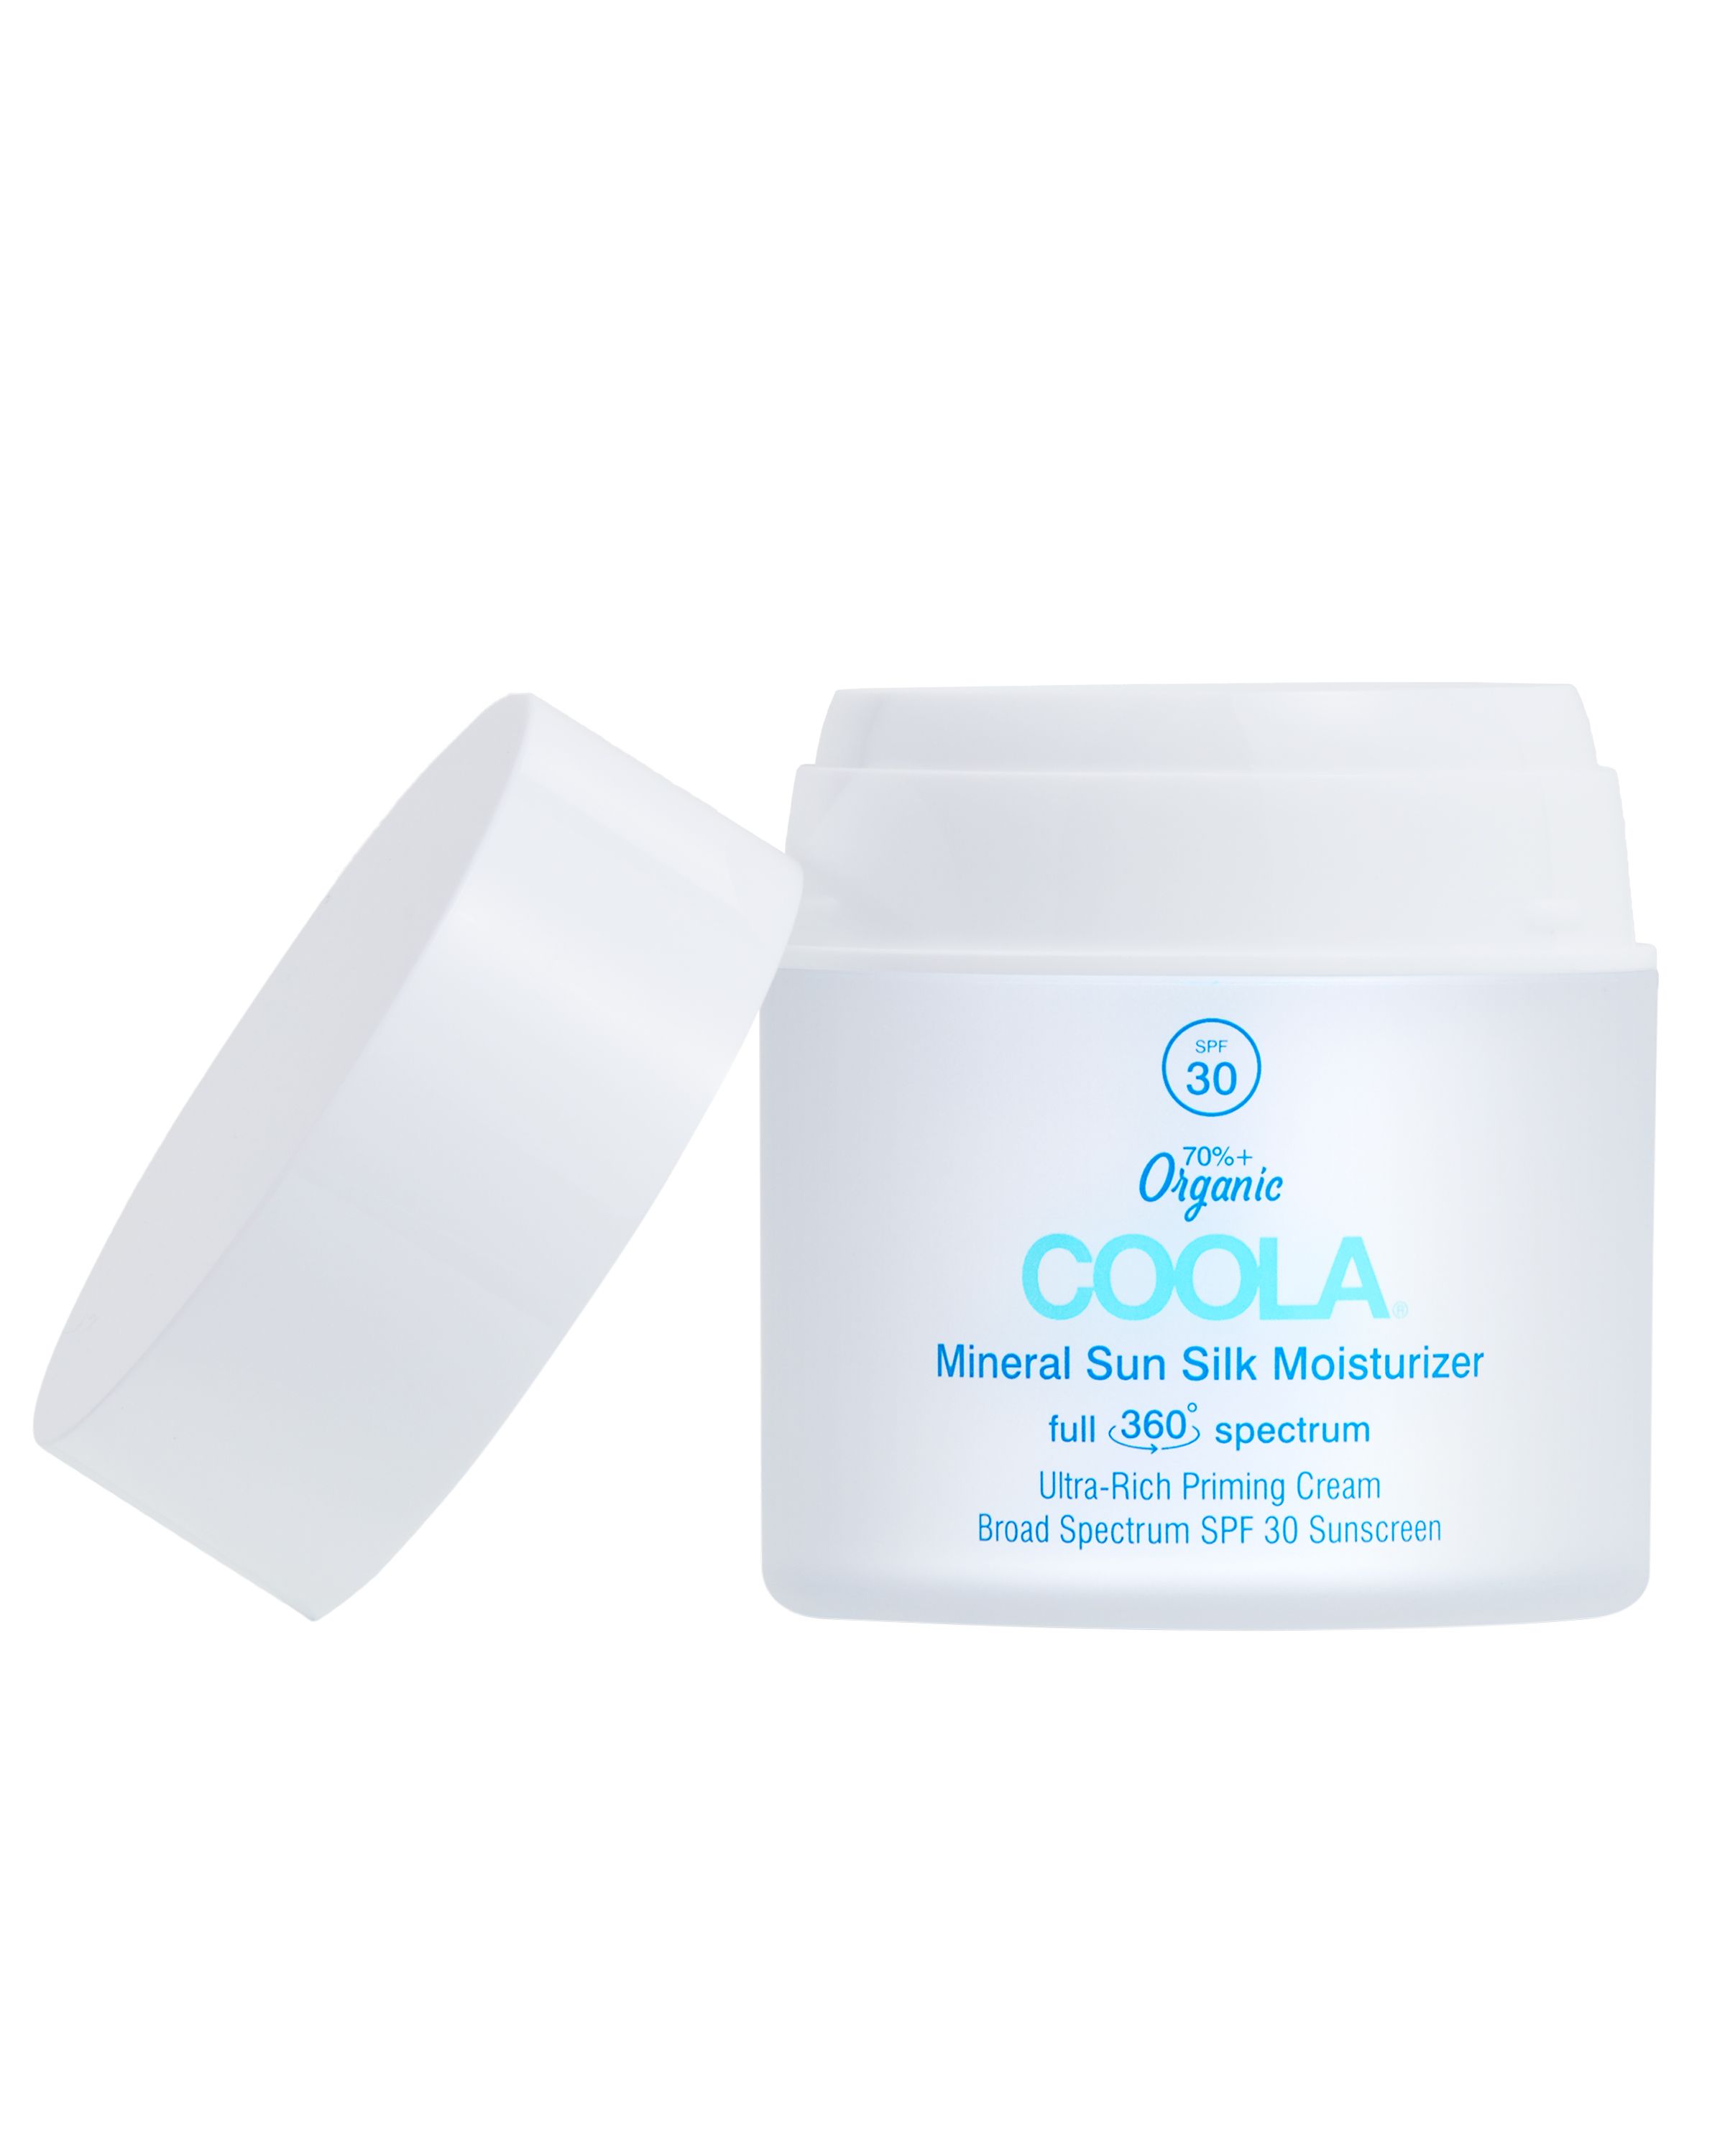 COOLA Full Spectrum 360° Mineral Sun Silk Moisturizer Organic Face Sunscreen, SPF 30 - 1.5 fl oz